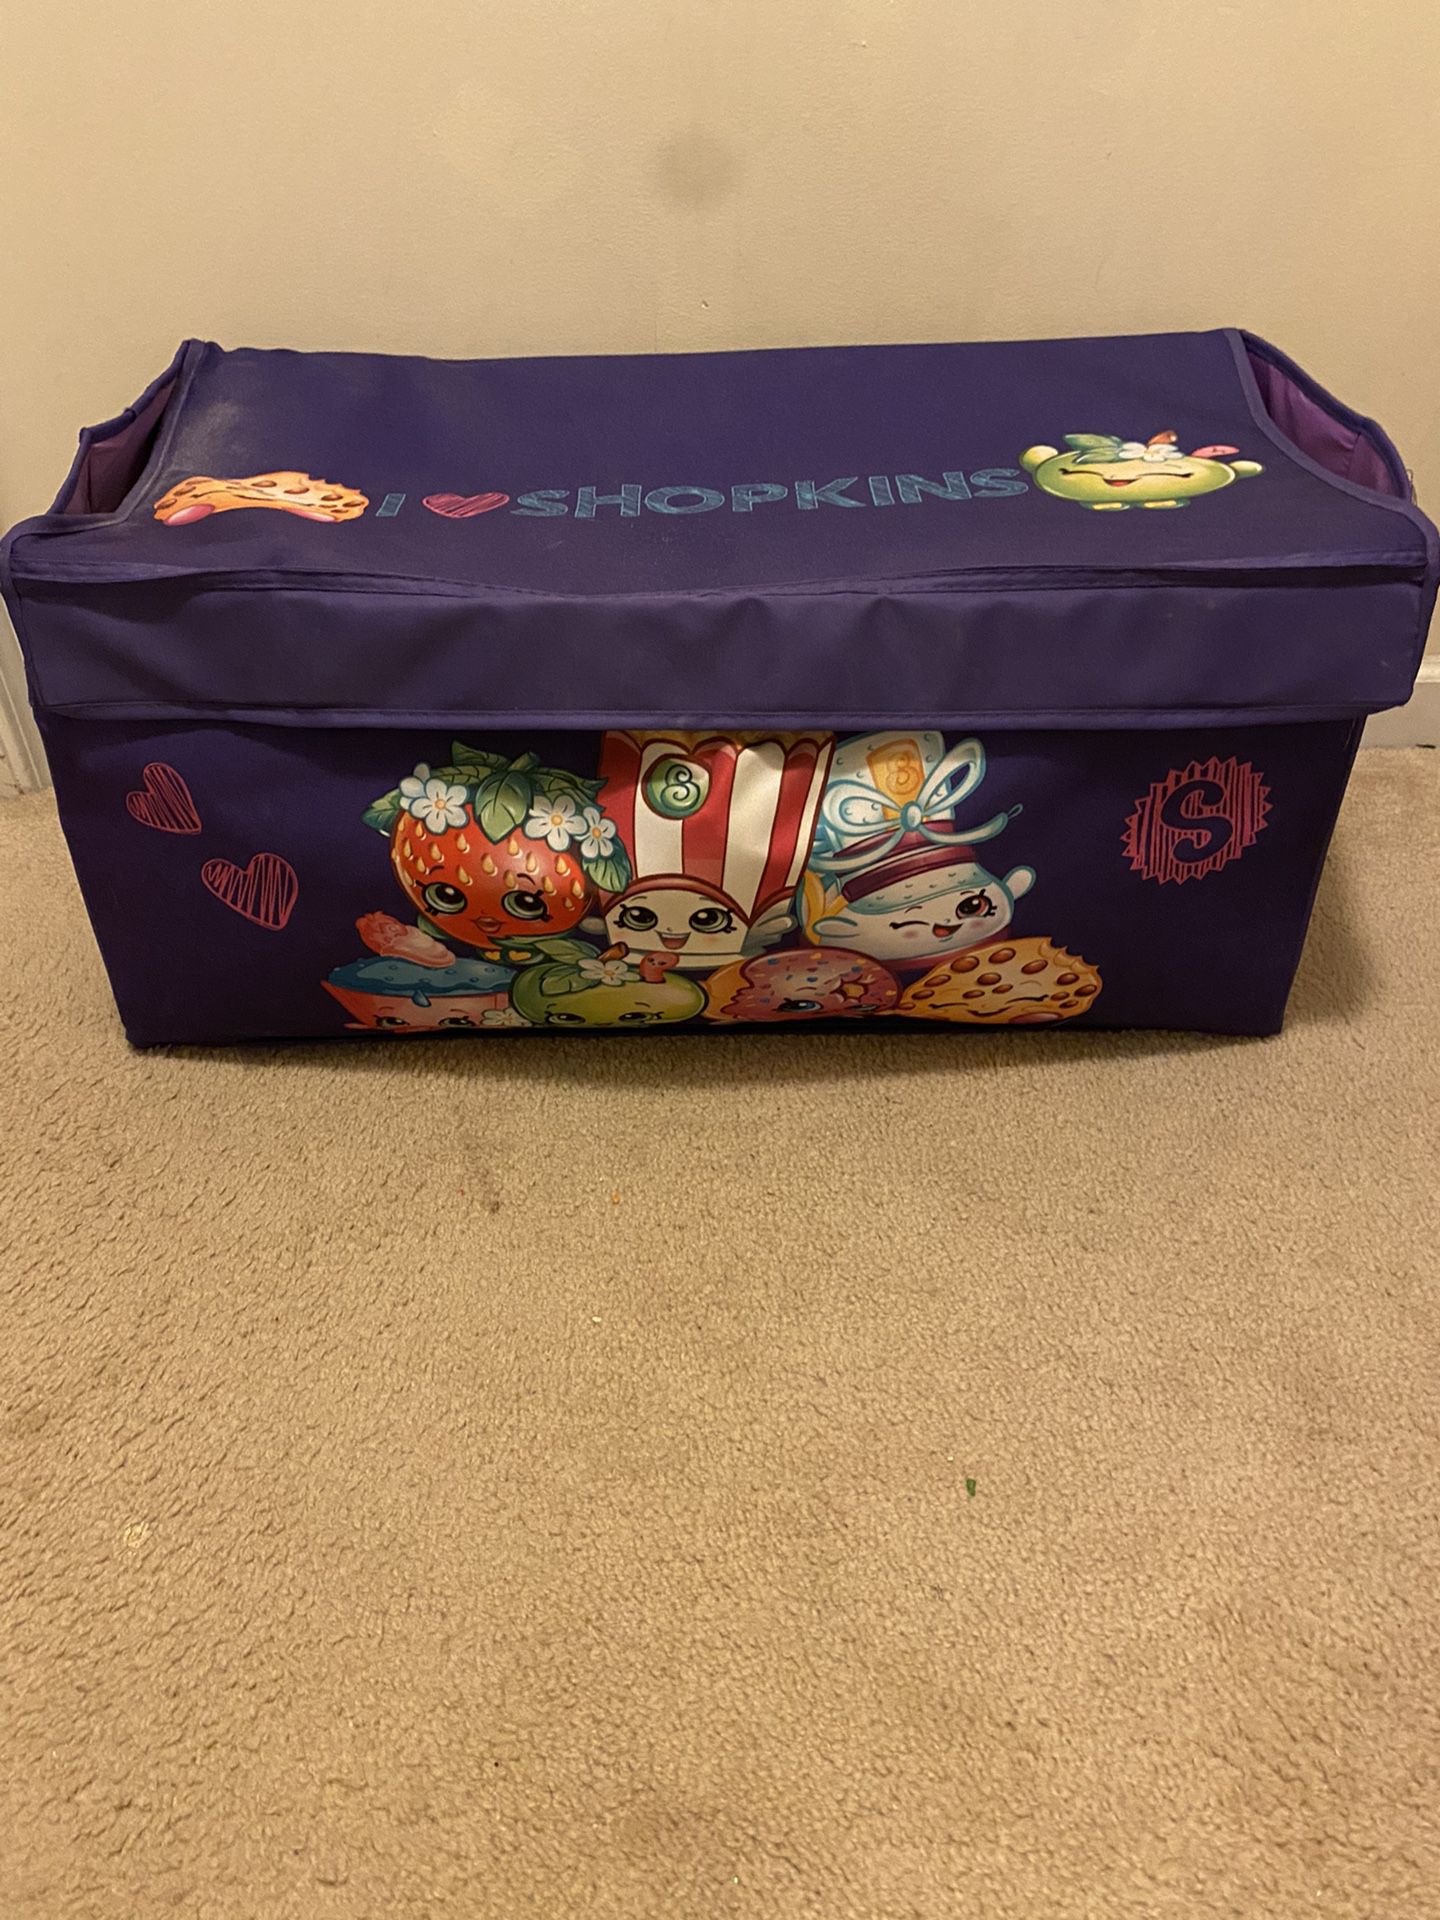 Shopkins Large Toy Box 